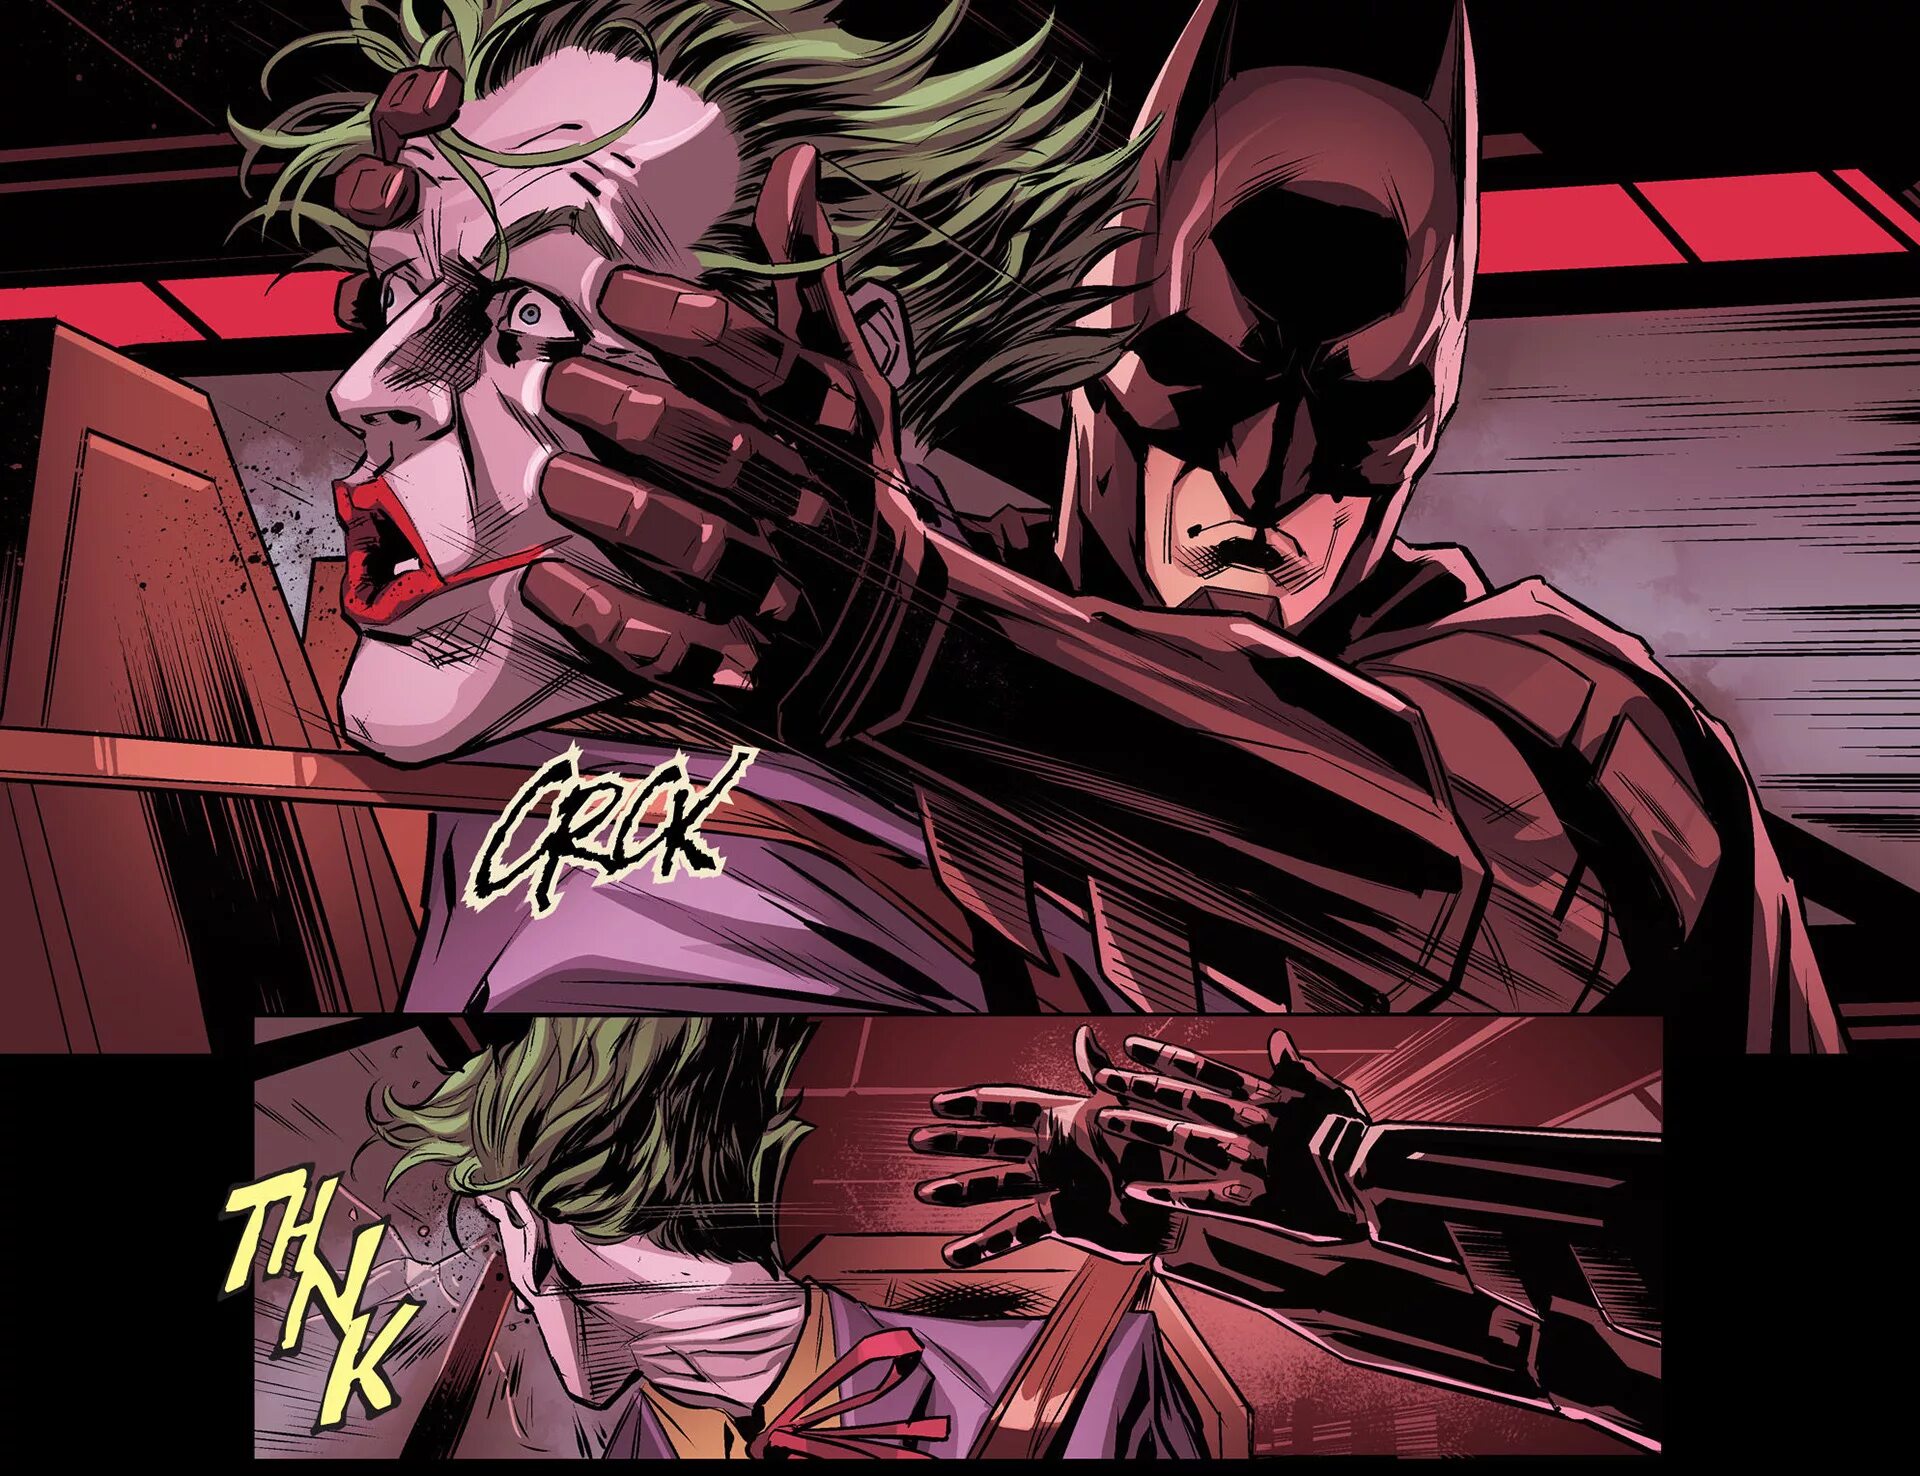 Batman kills. Injustice комикс Бэтмен убивает Джокера. Бэтмен Джокер Инджастис. Джокер Инджастис комикс.